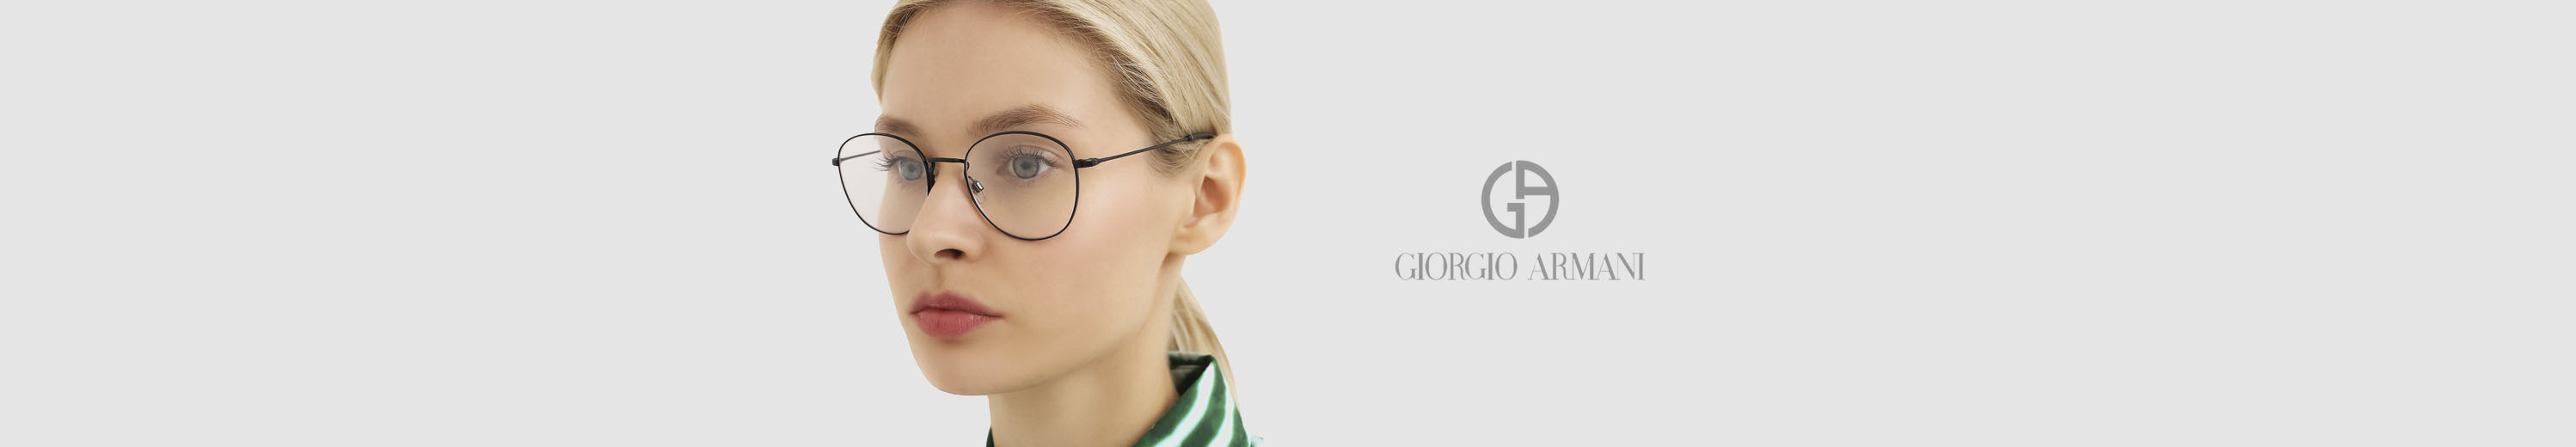 Giorgio Armani Aviator Eyeglasses